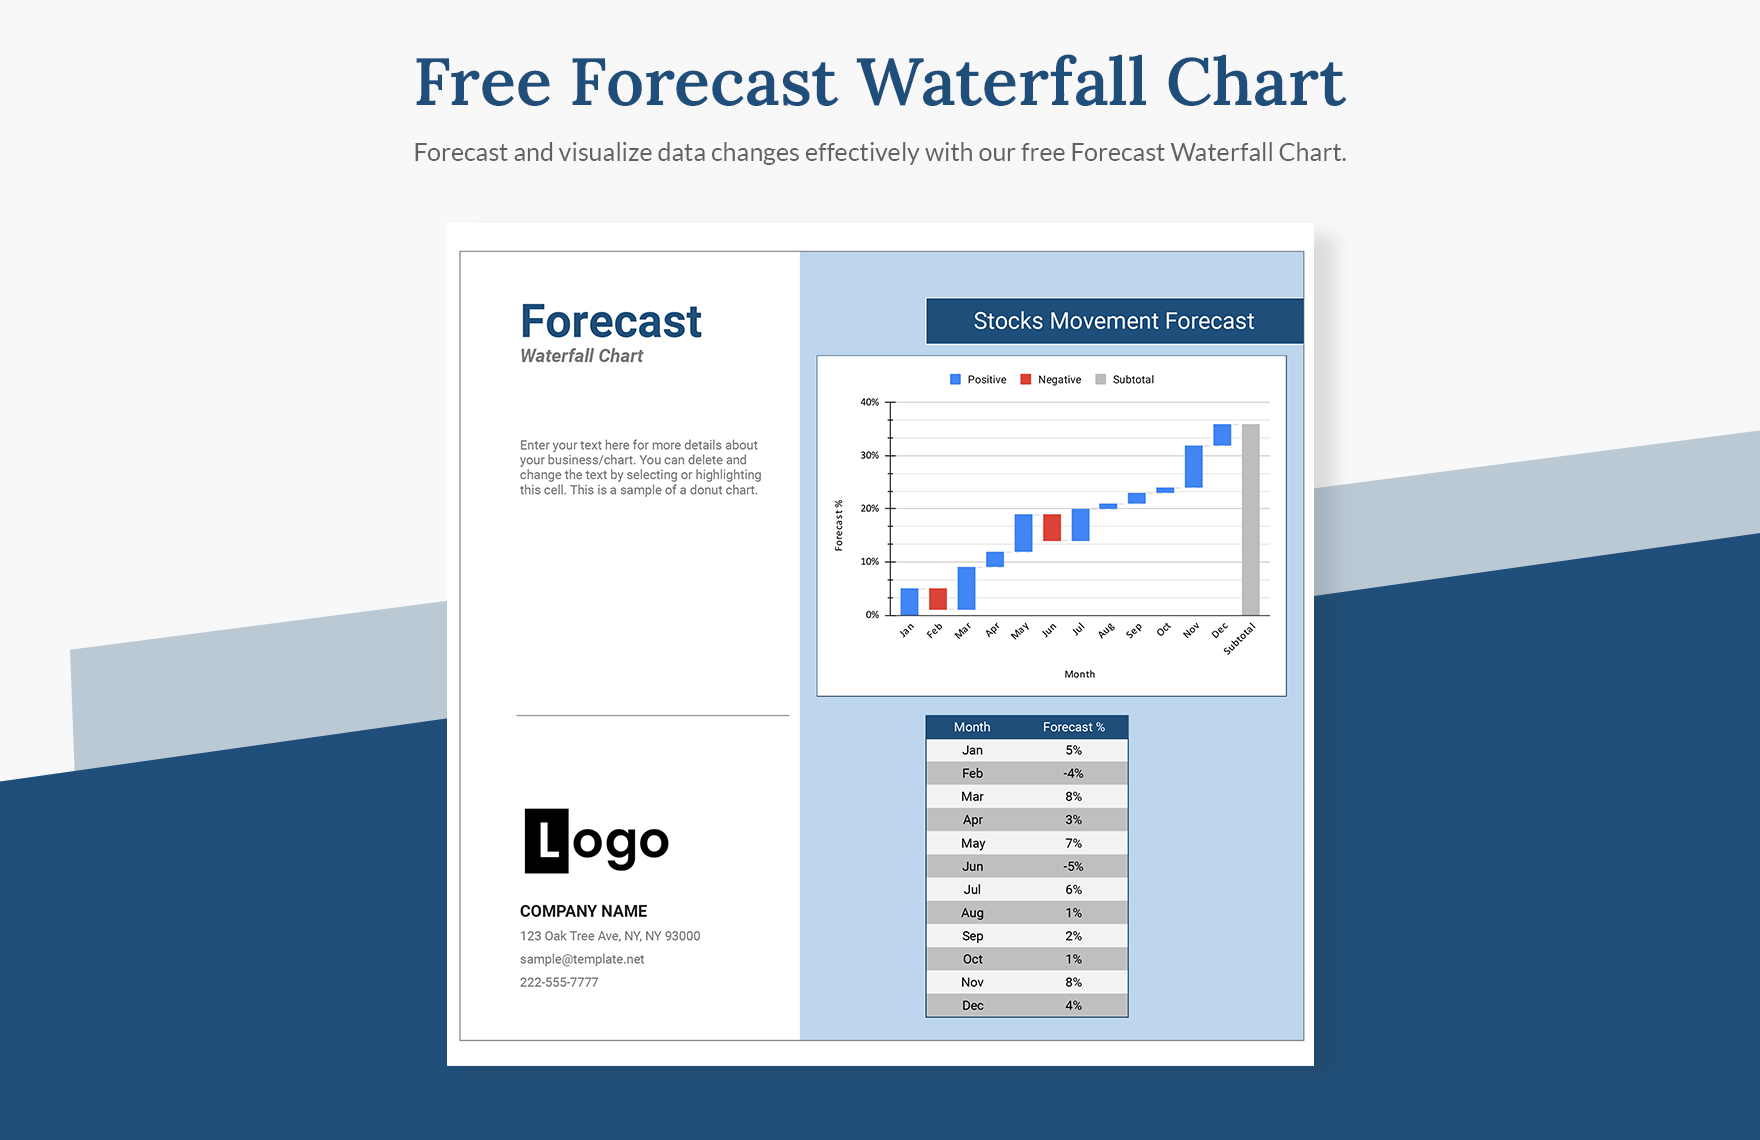 Forecast Waterfall Chart